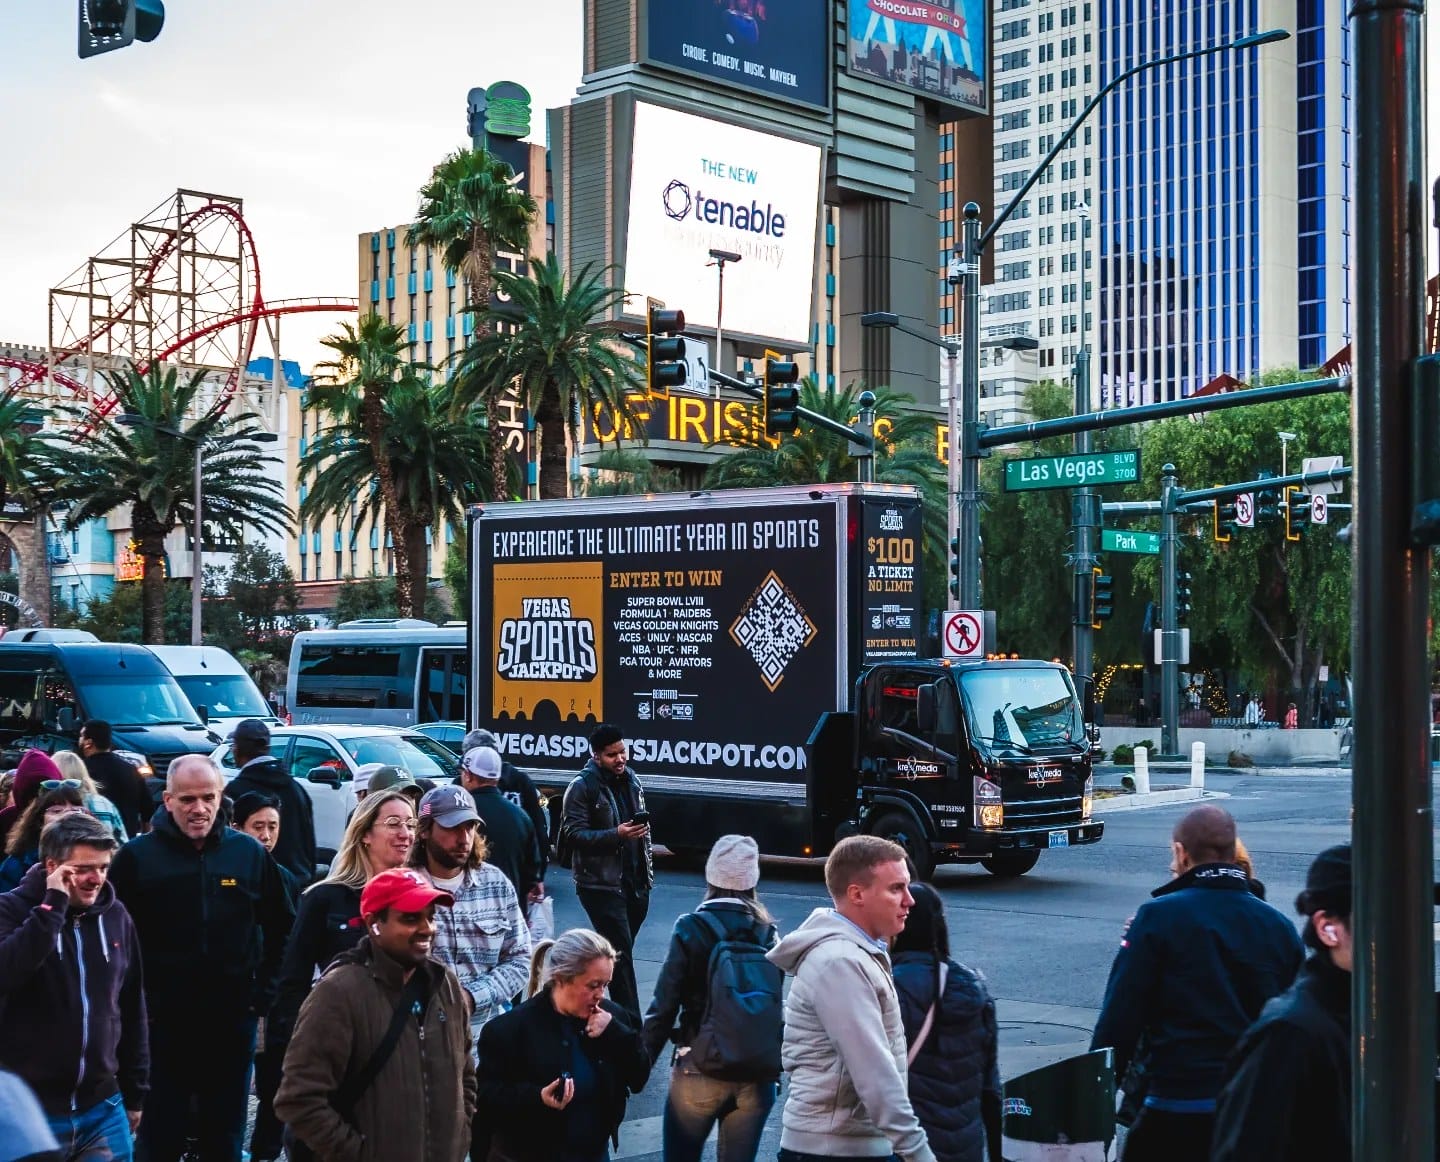 Crowded Las Vegas street with advertising billboards.